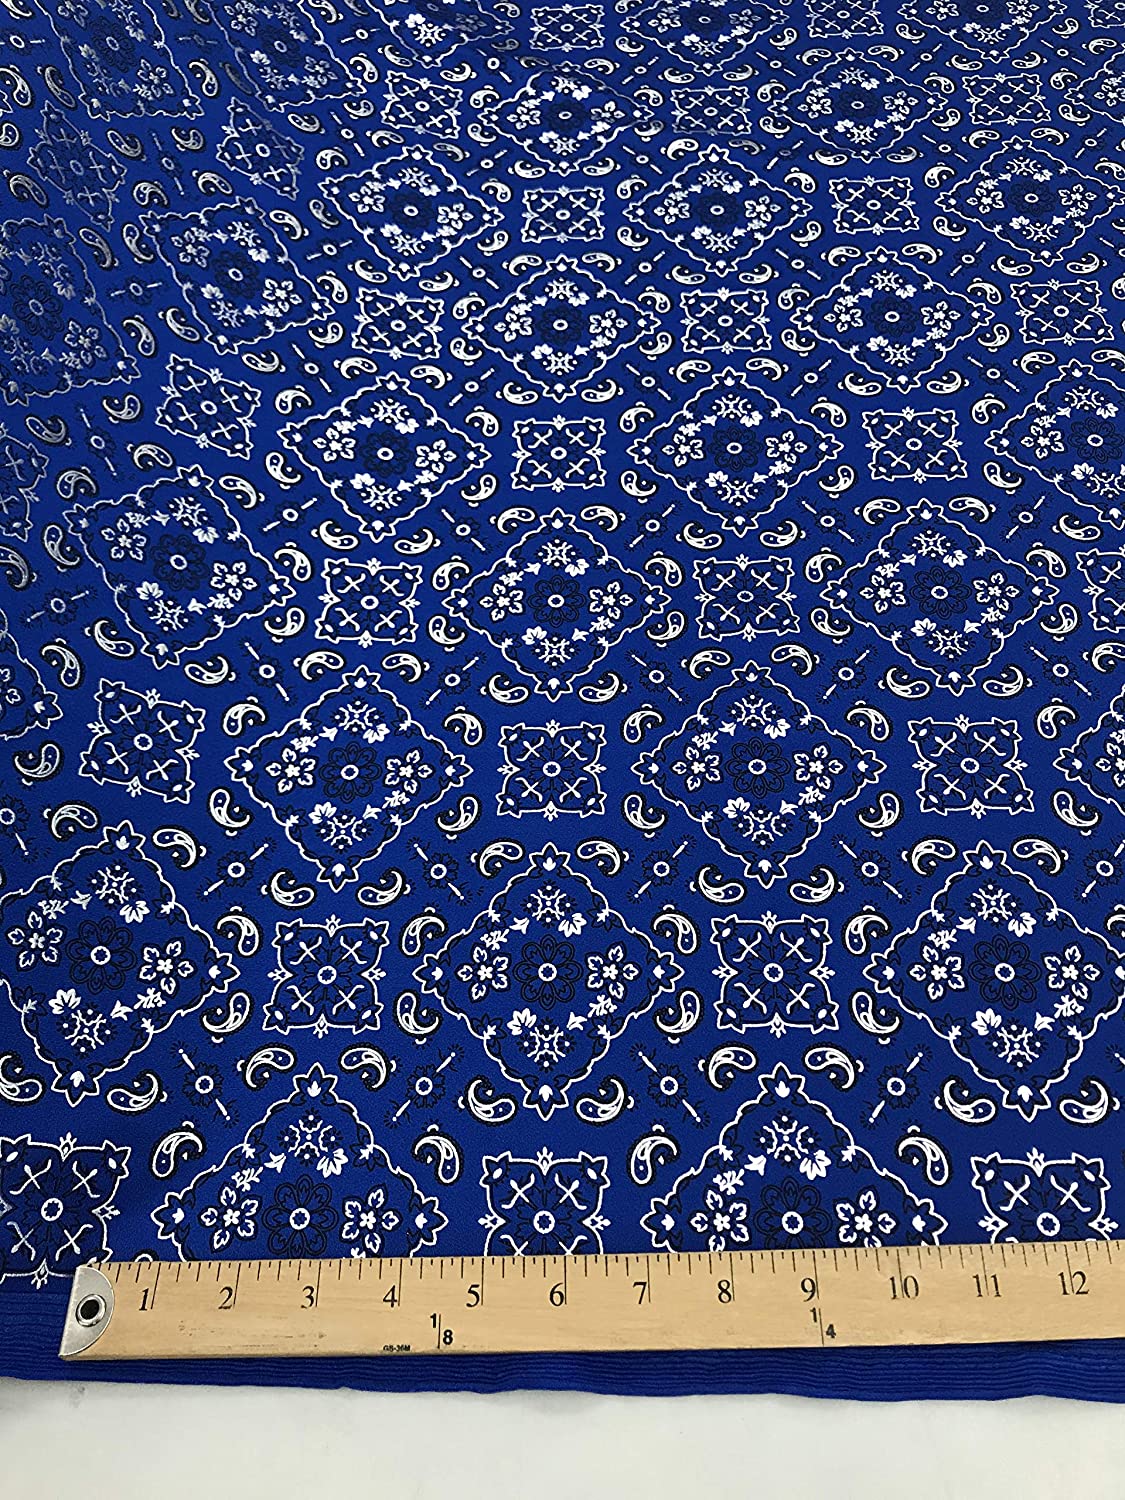 Spandex Bandana Print on 4 Way Stretch Fabric (Royal Blue, 1 Yard)